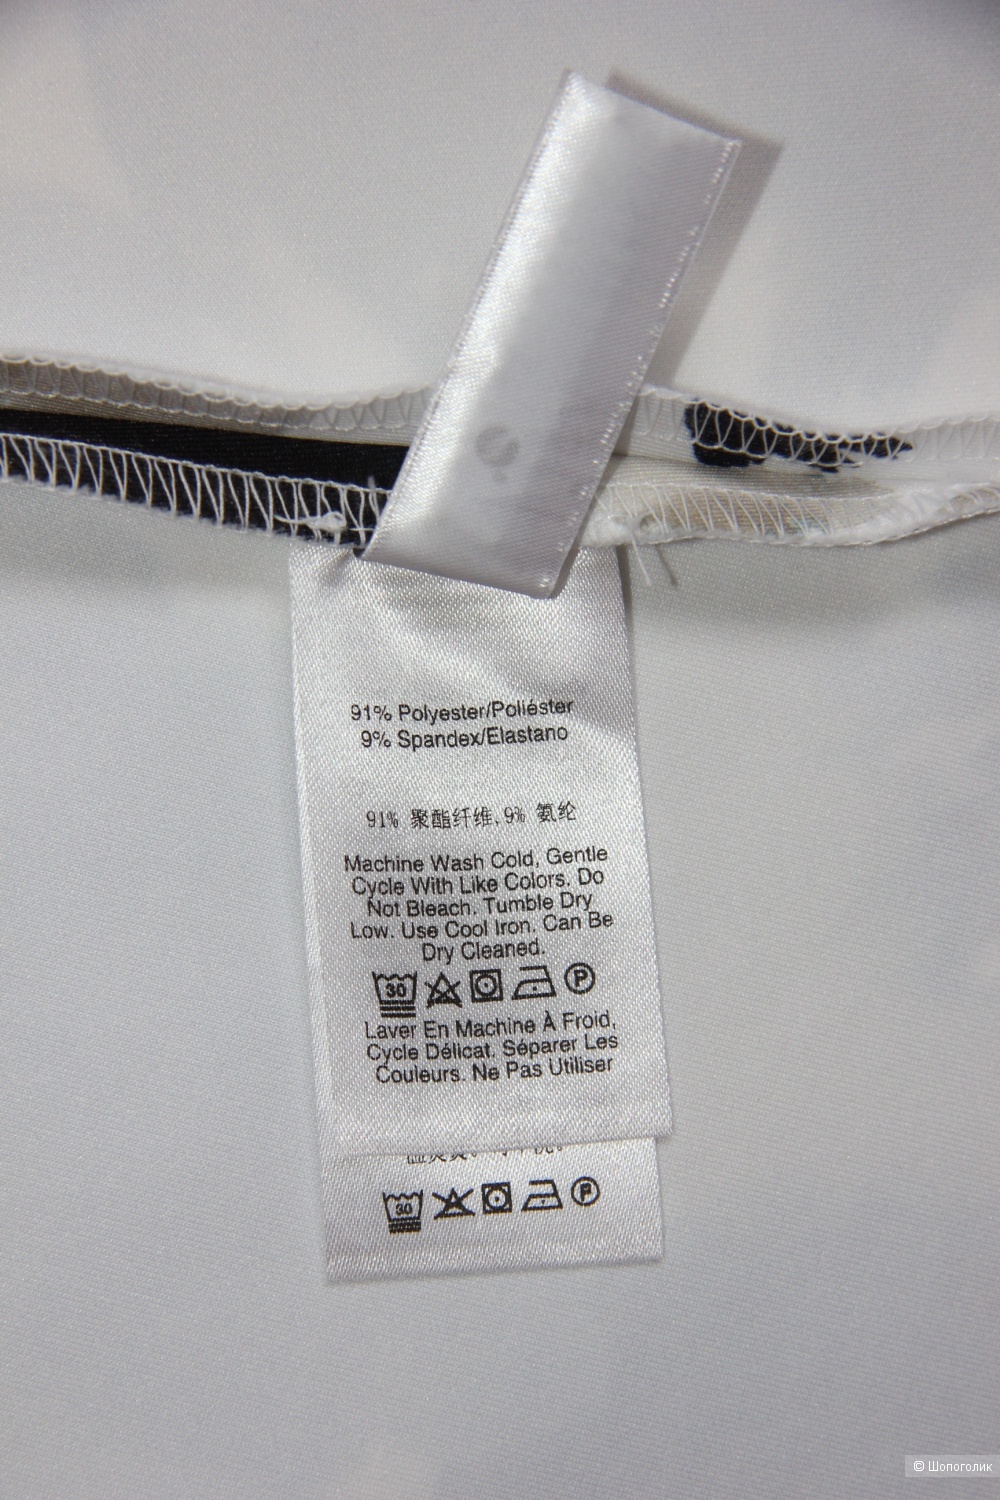 Платье DKNY размер 44-46(М)